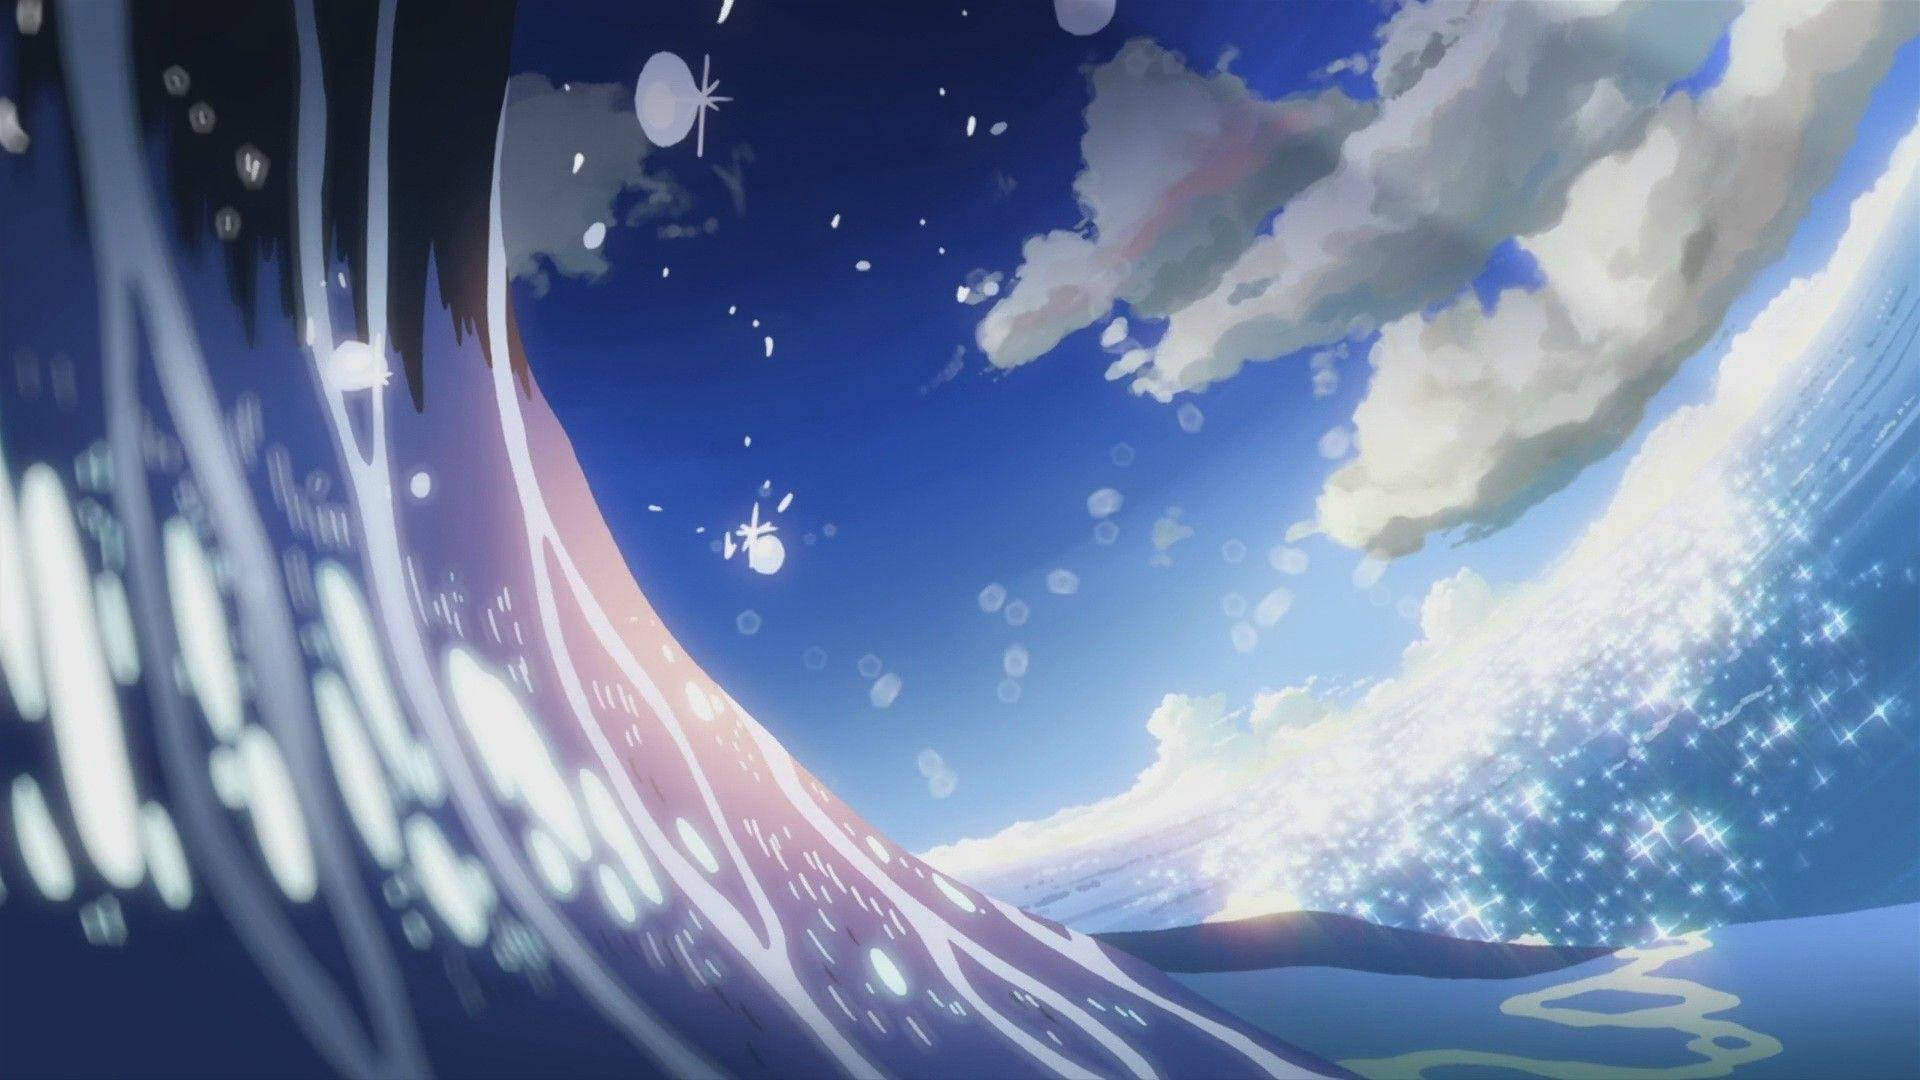 Aesthetic Anime Scenery Of Ocean Waves Background